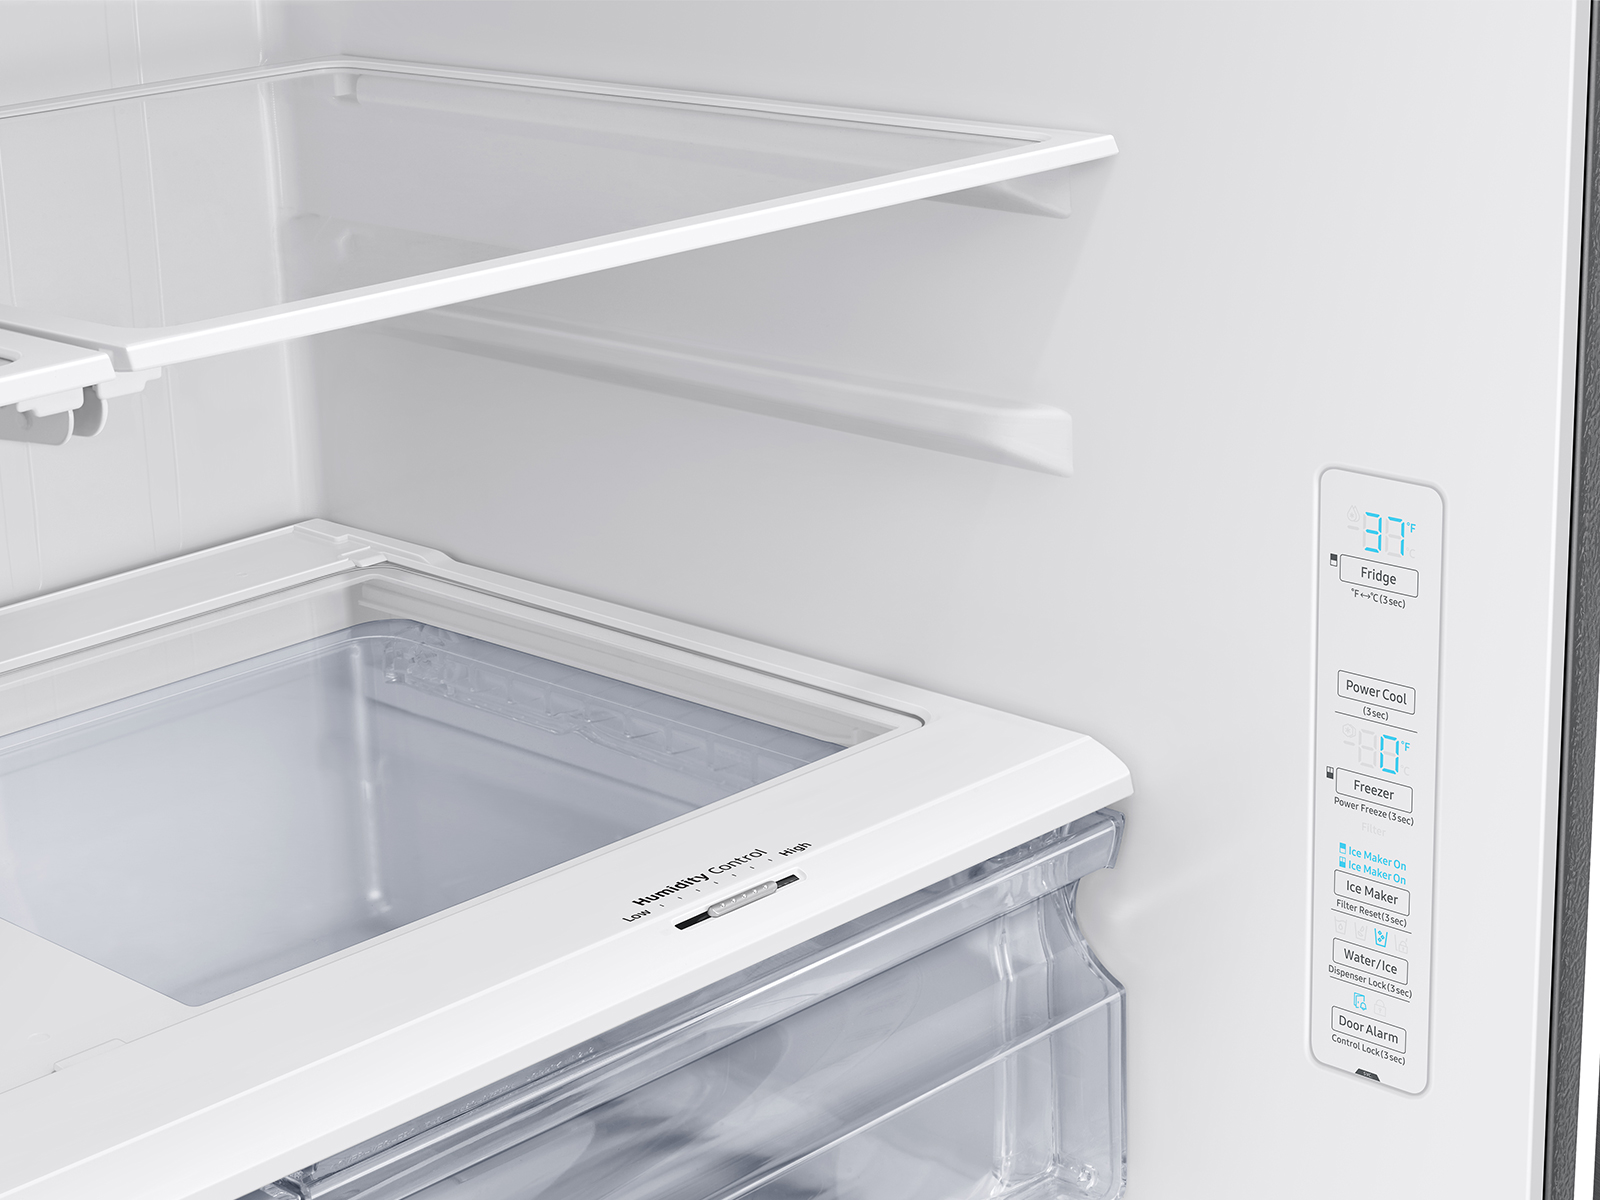 Samsung refrigerator setup and installation